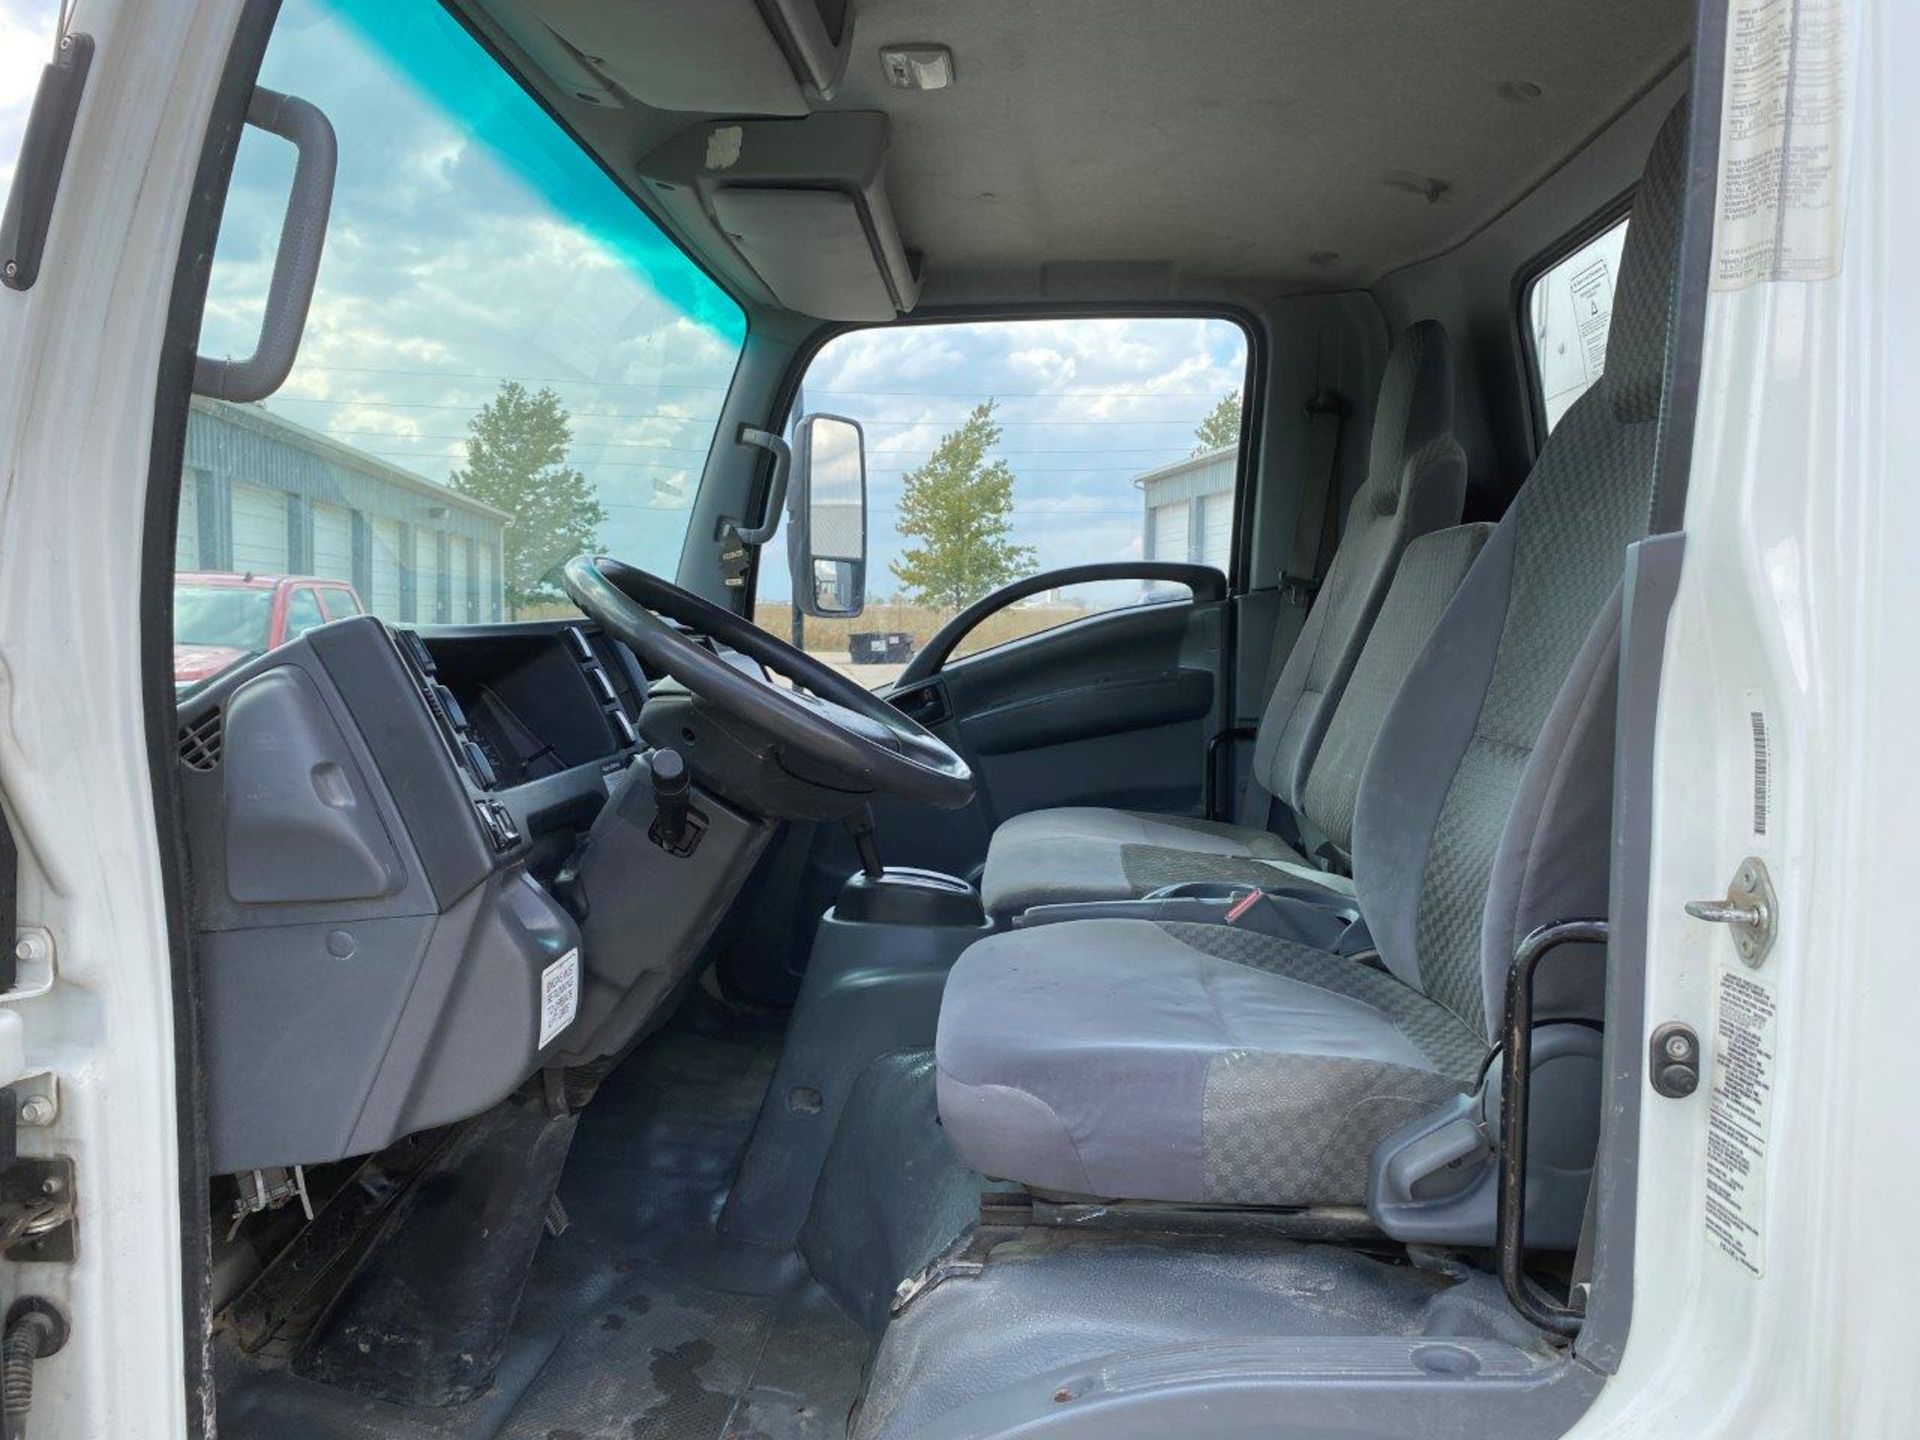 2014 Isuzu COE box truck, model NPR HD, VIN 54DC4W1B0FS800486, GVWR 20,500 pounds. - Image 11 of 16